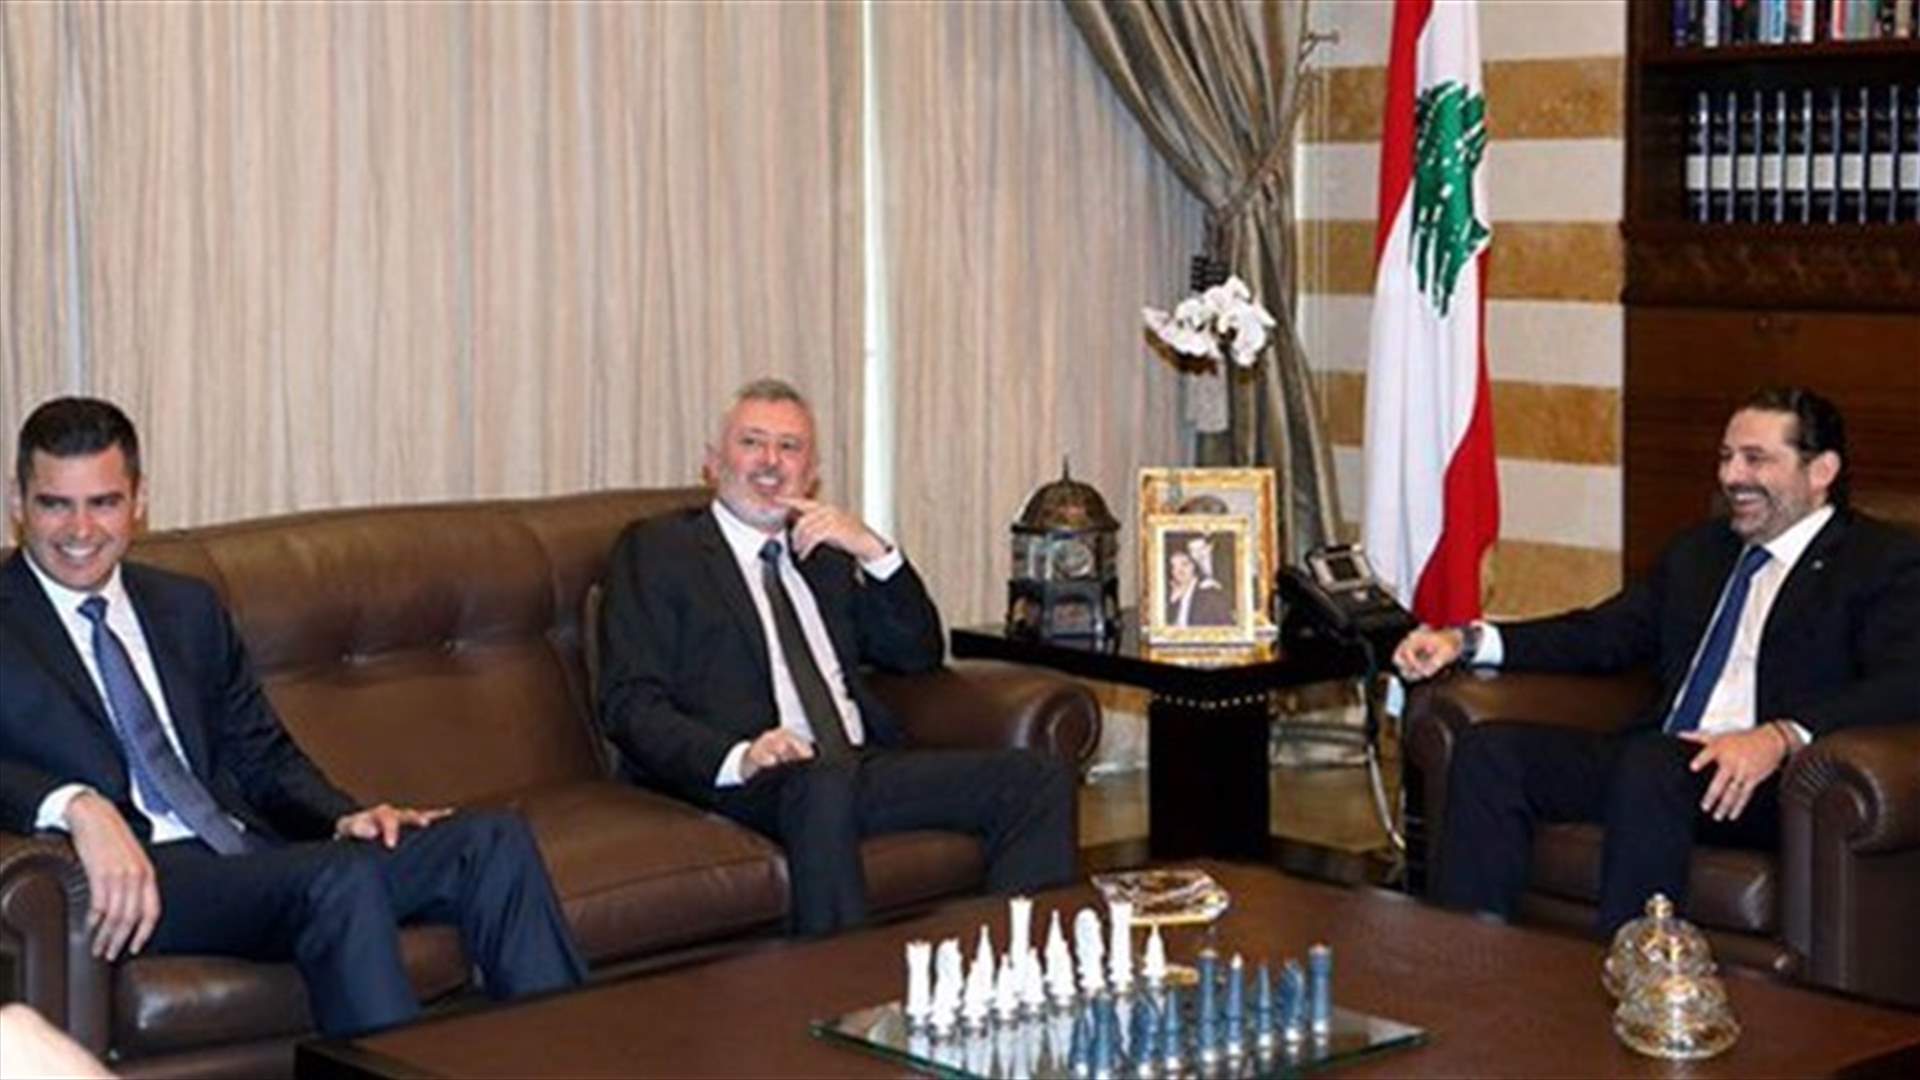 PM Hariri meets with MP Frangieh in Bayt Al-Wasat